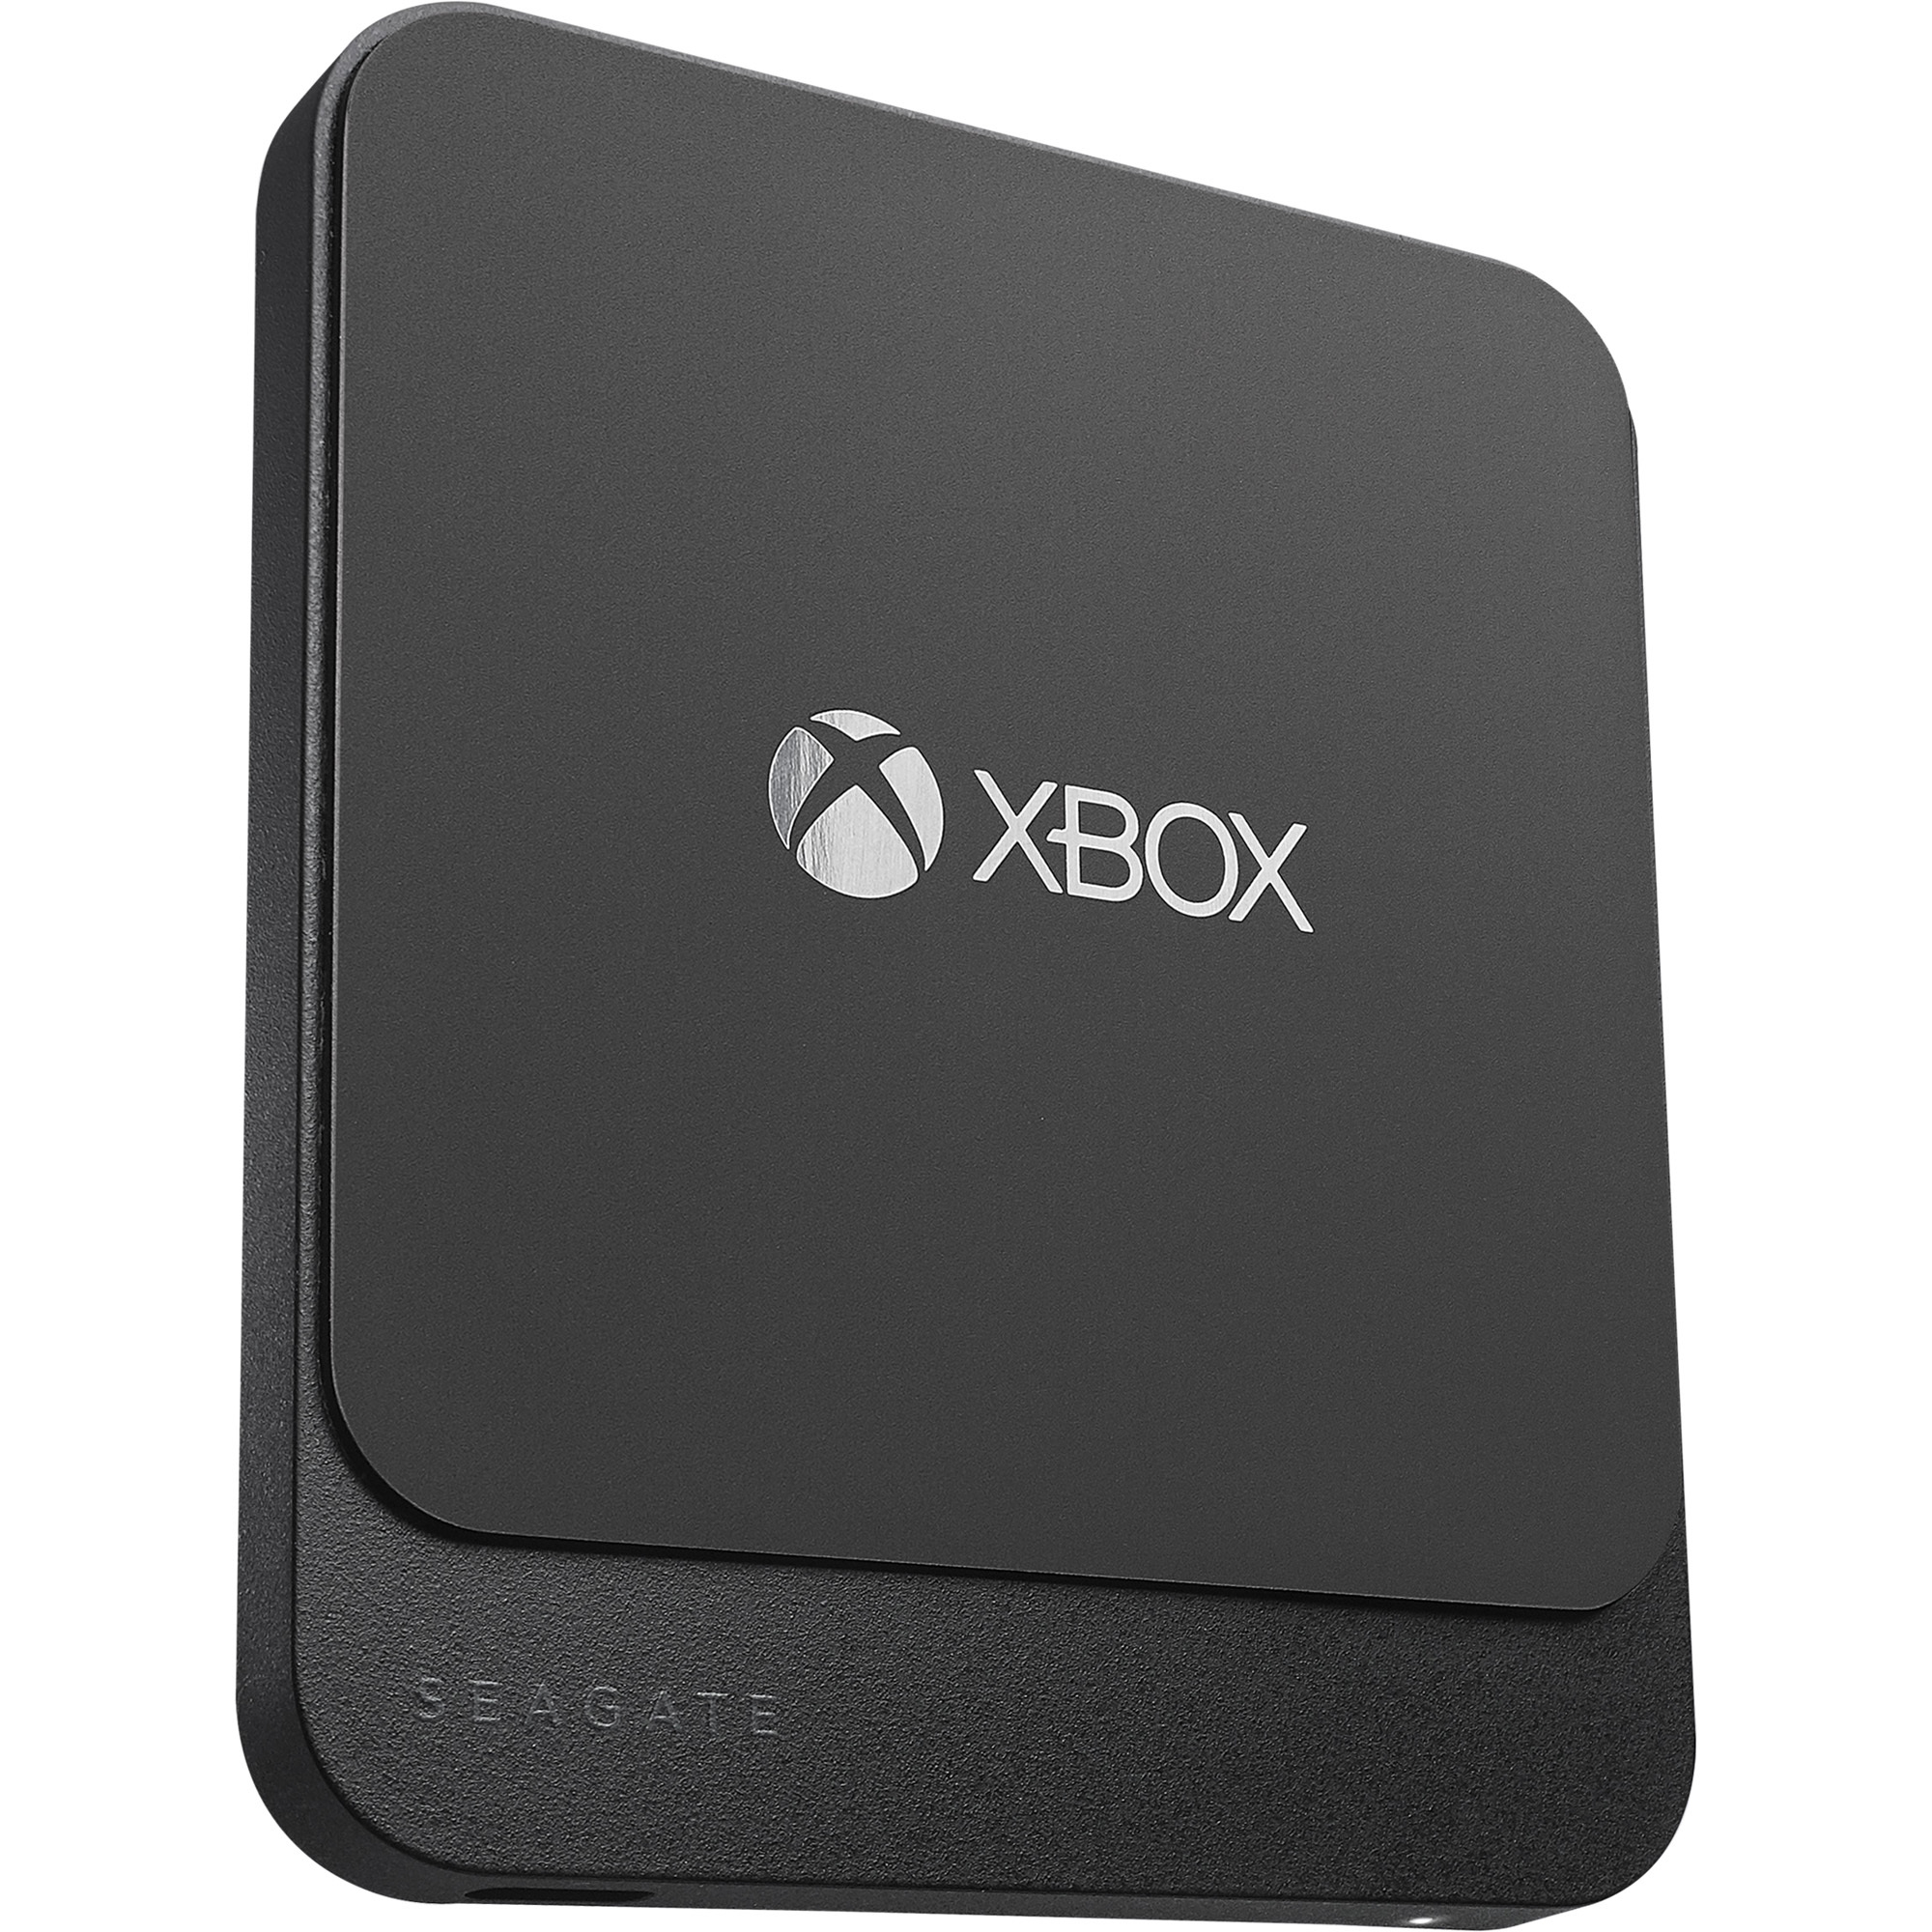 YMMV Seagate Game Drive for Xbox SSD 1TB $89.00, 500GB $59.00 @ Walmart